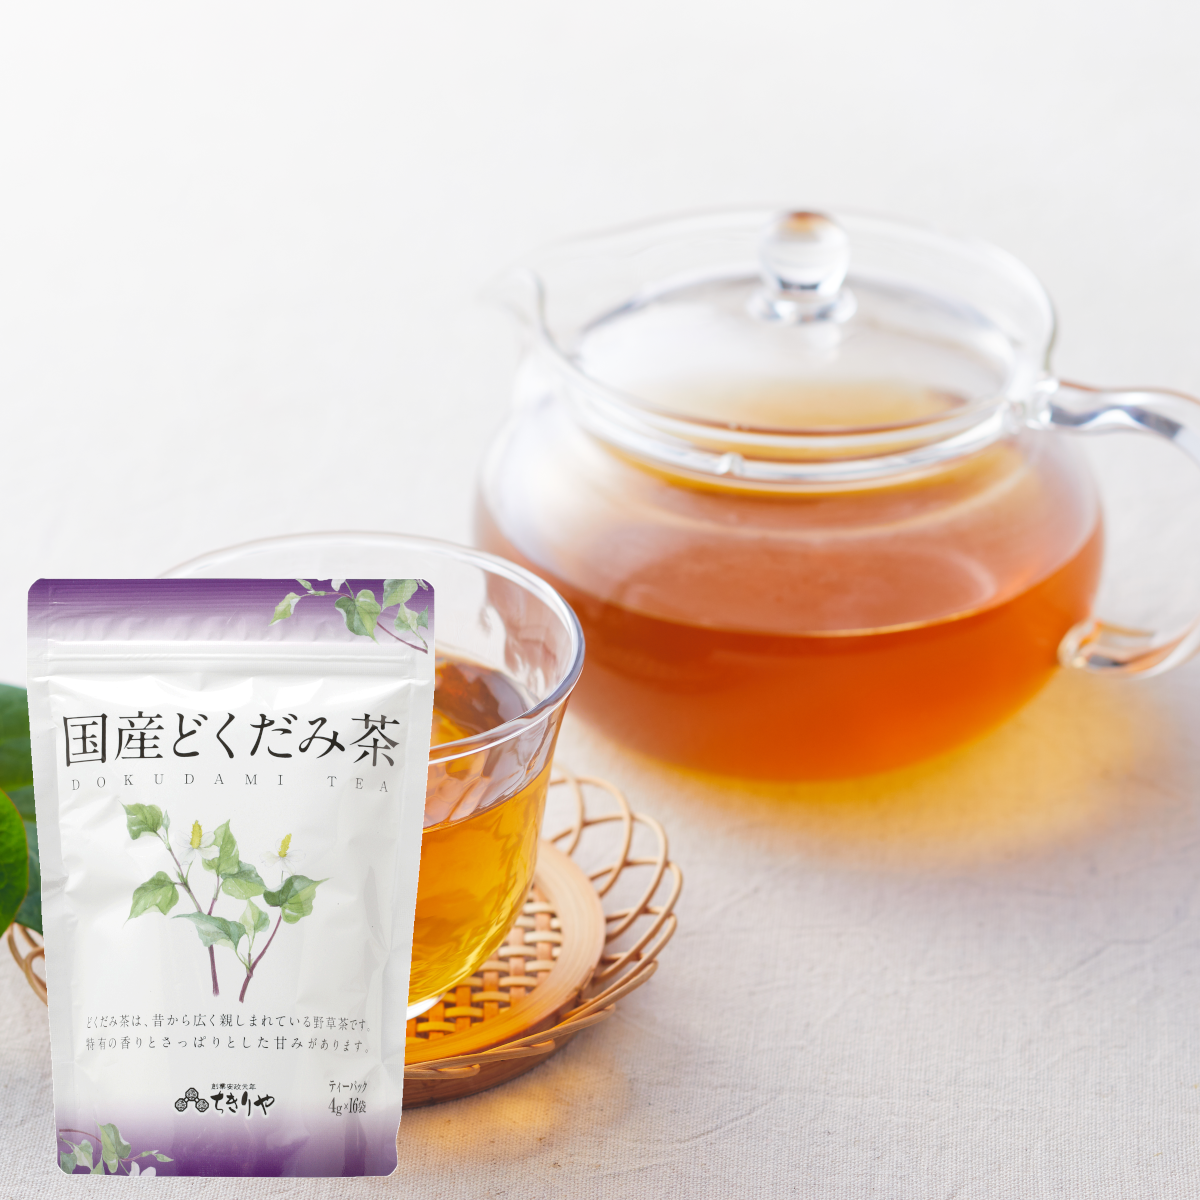 Dokudami Tea made with 100% Japan grown chameleon plant – 16 Tea bags